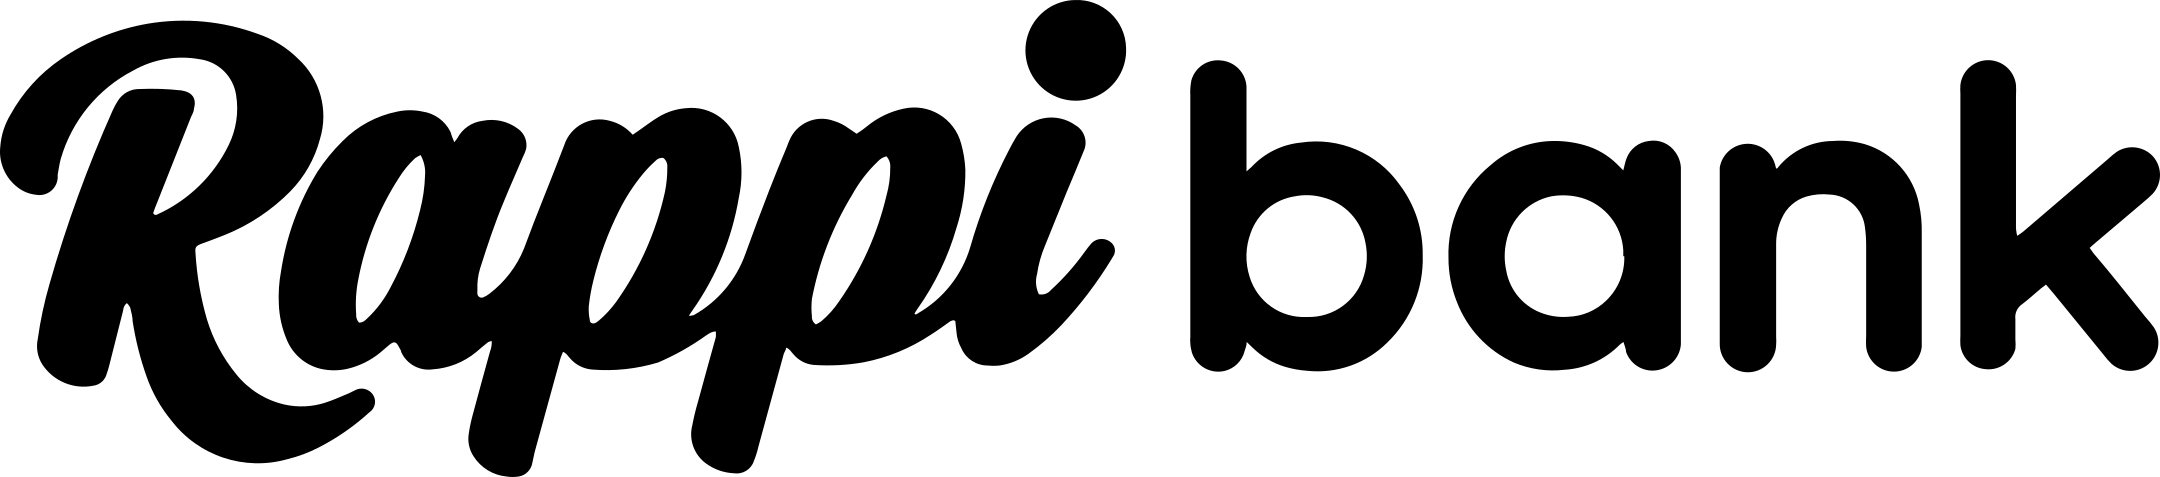 RappiBank Logo.